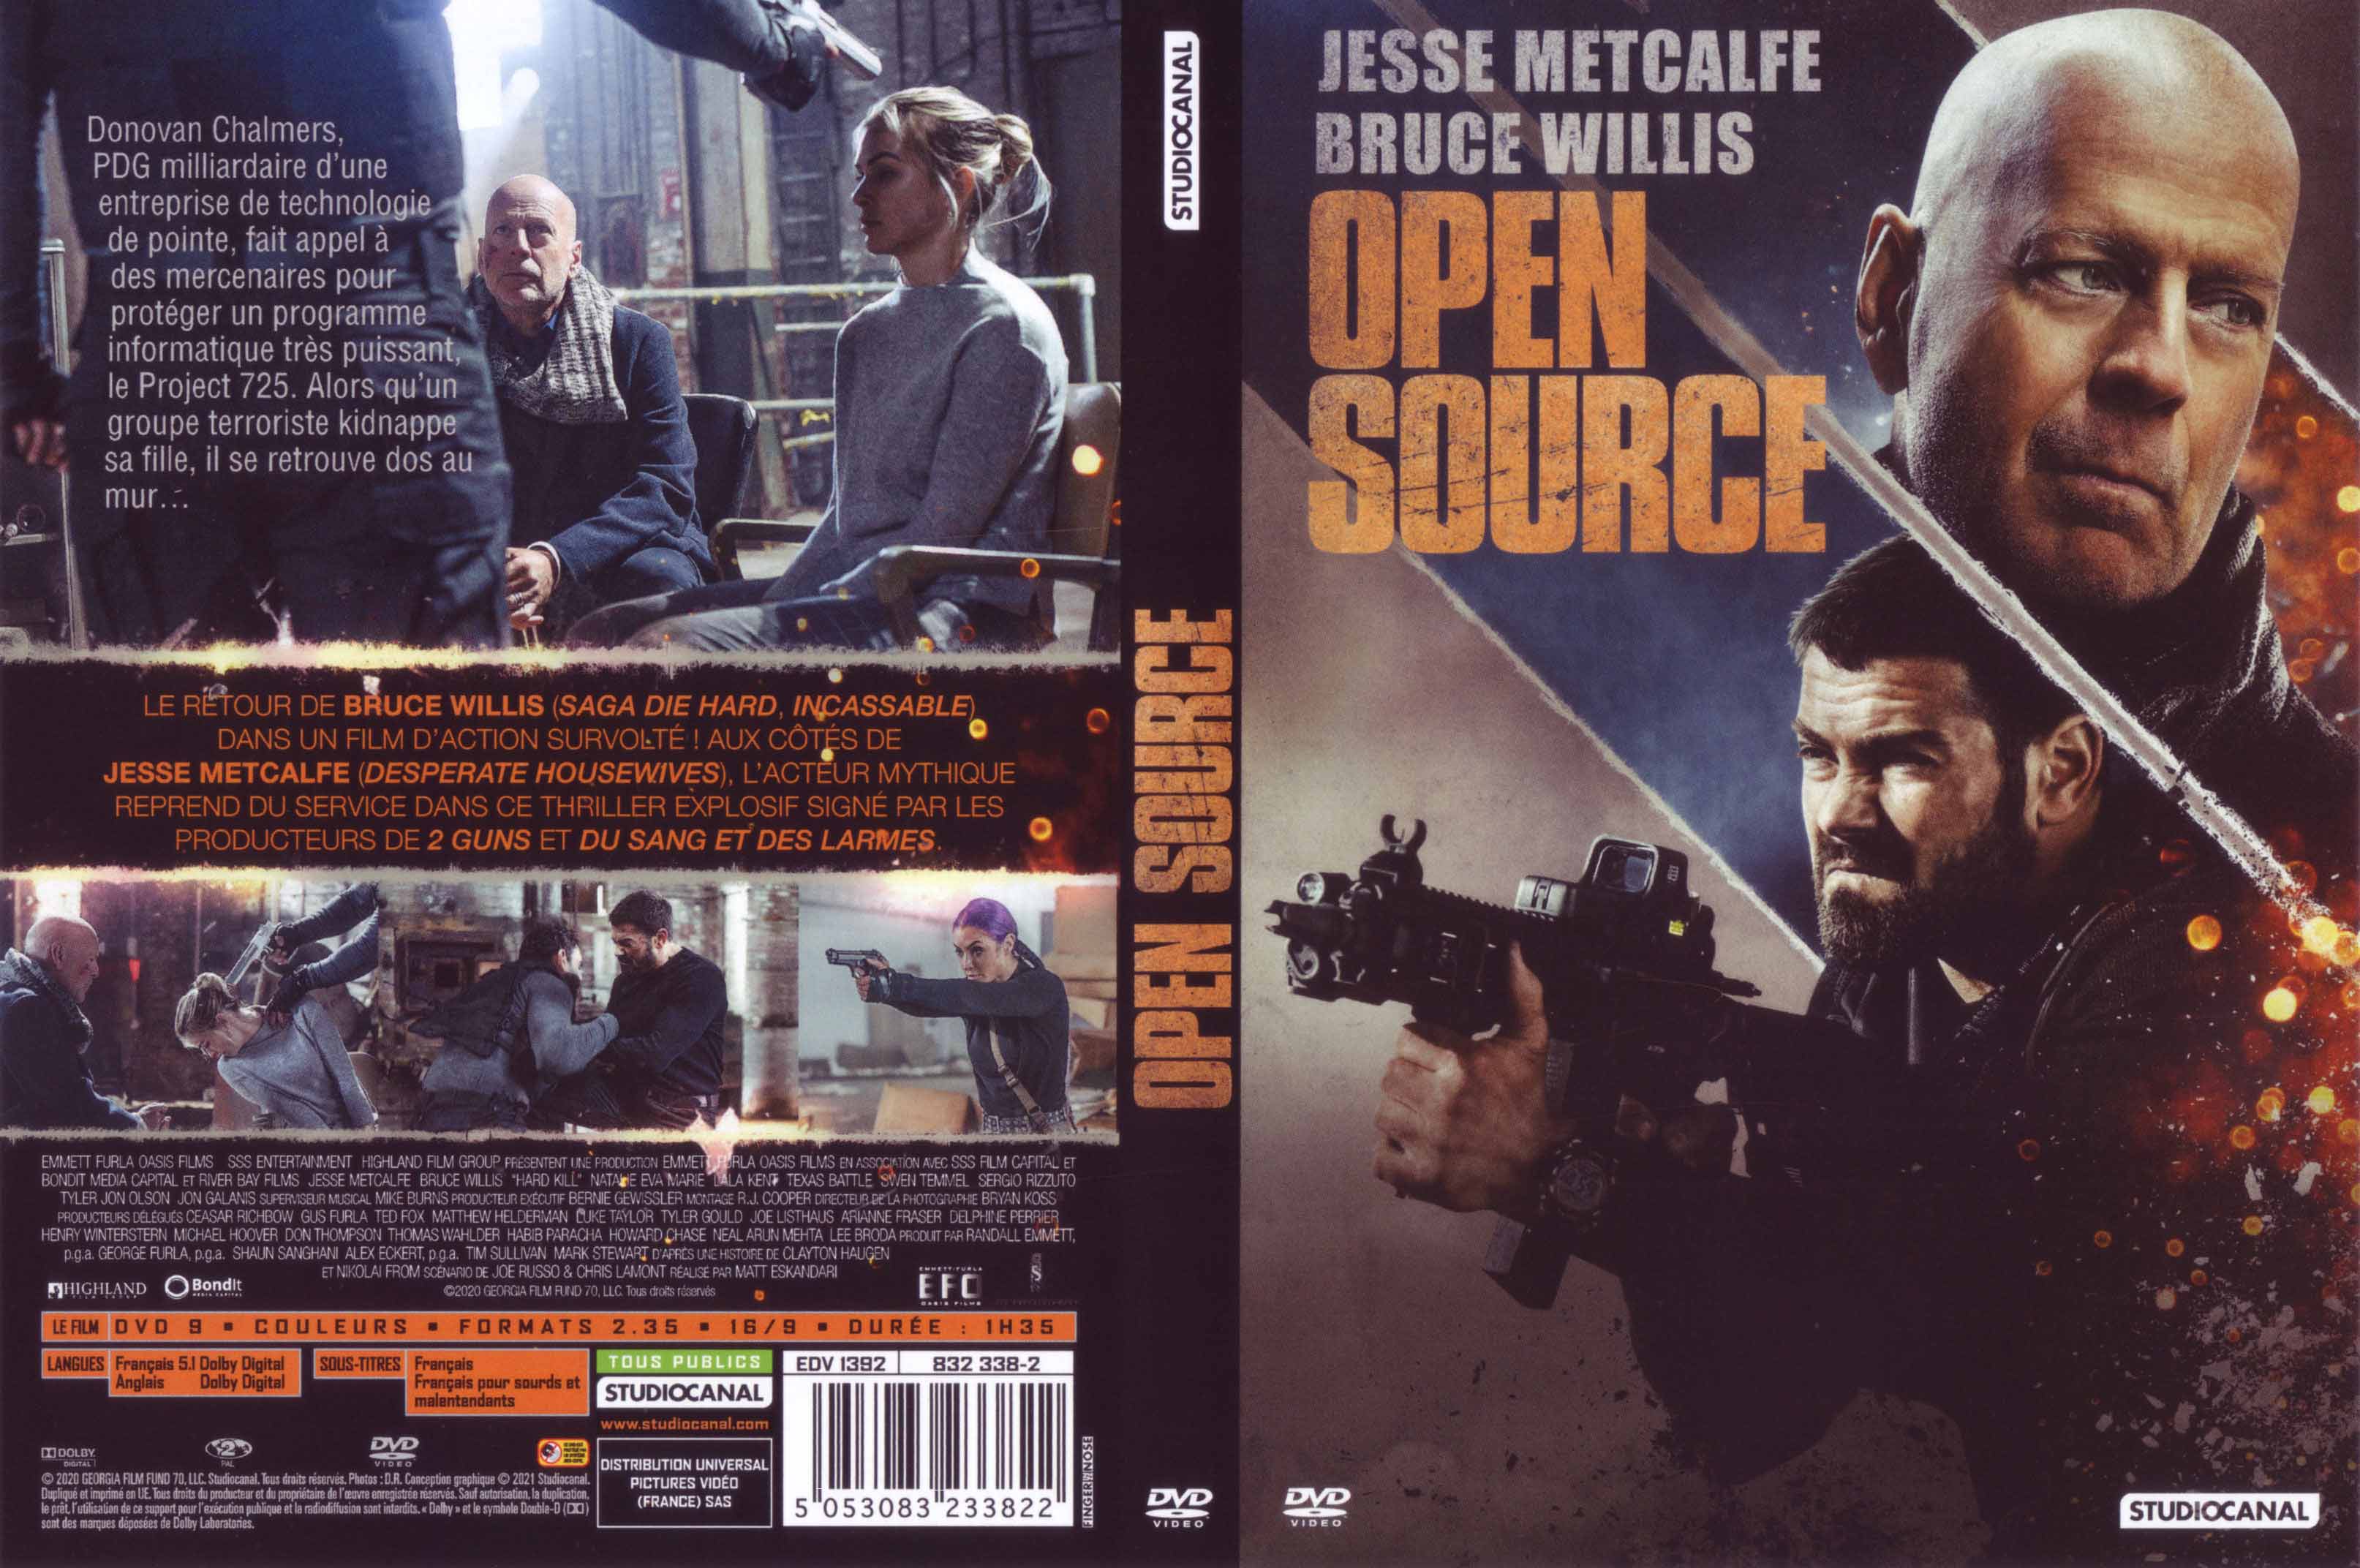 Jaquette DVD Open source